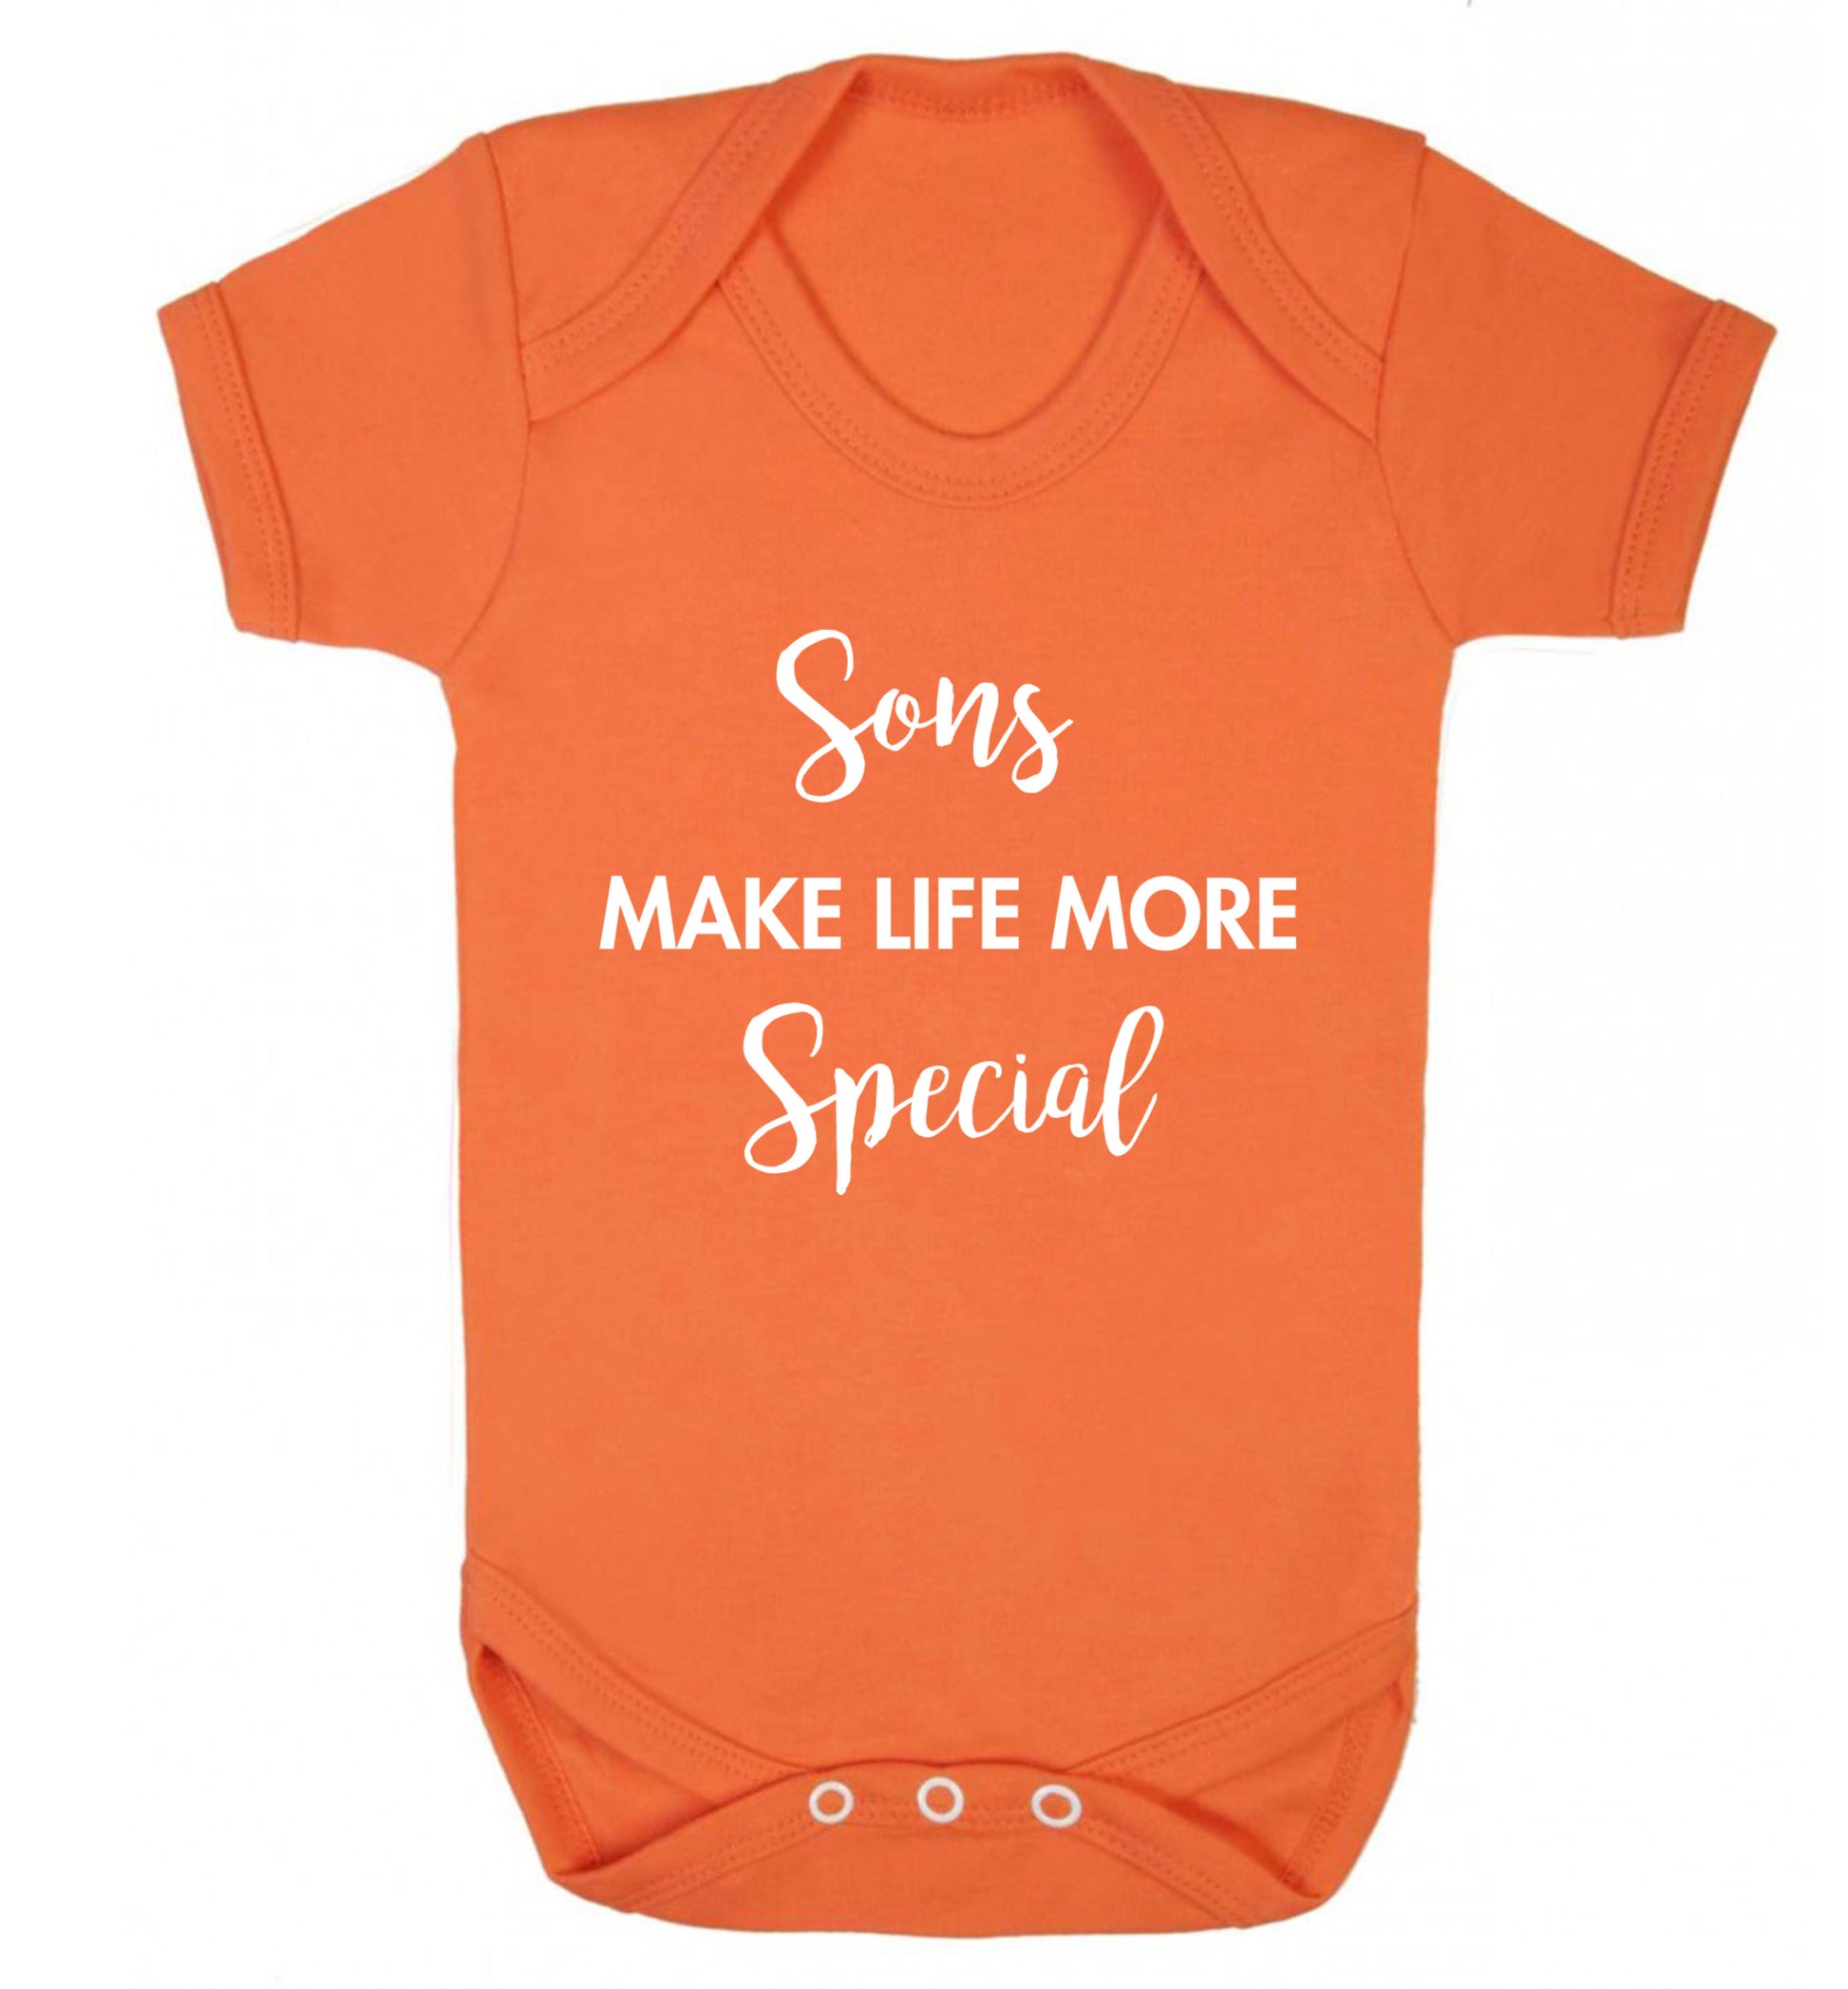 Daughters make life more special Baby Vest orange 18-24 months